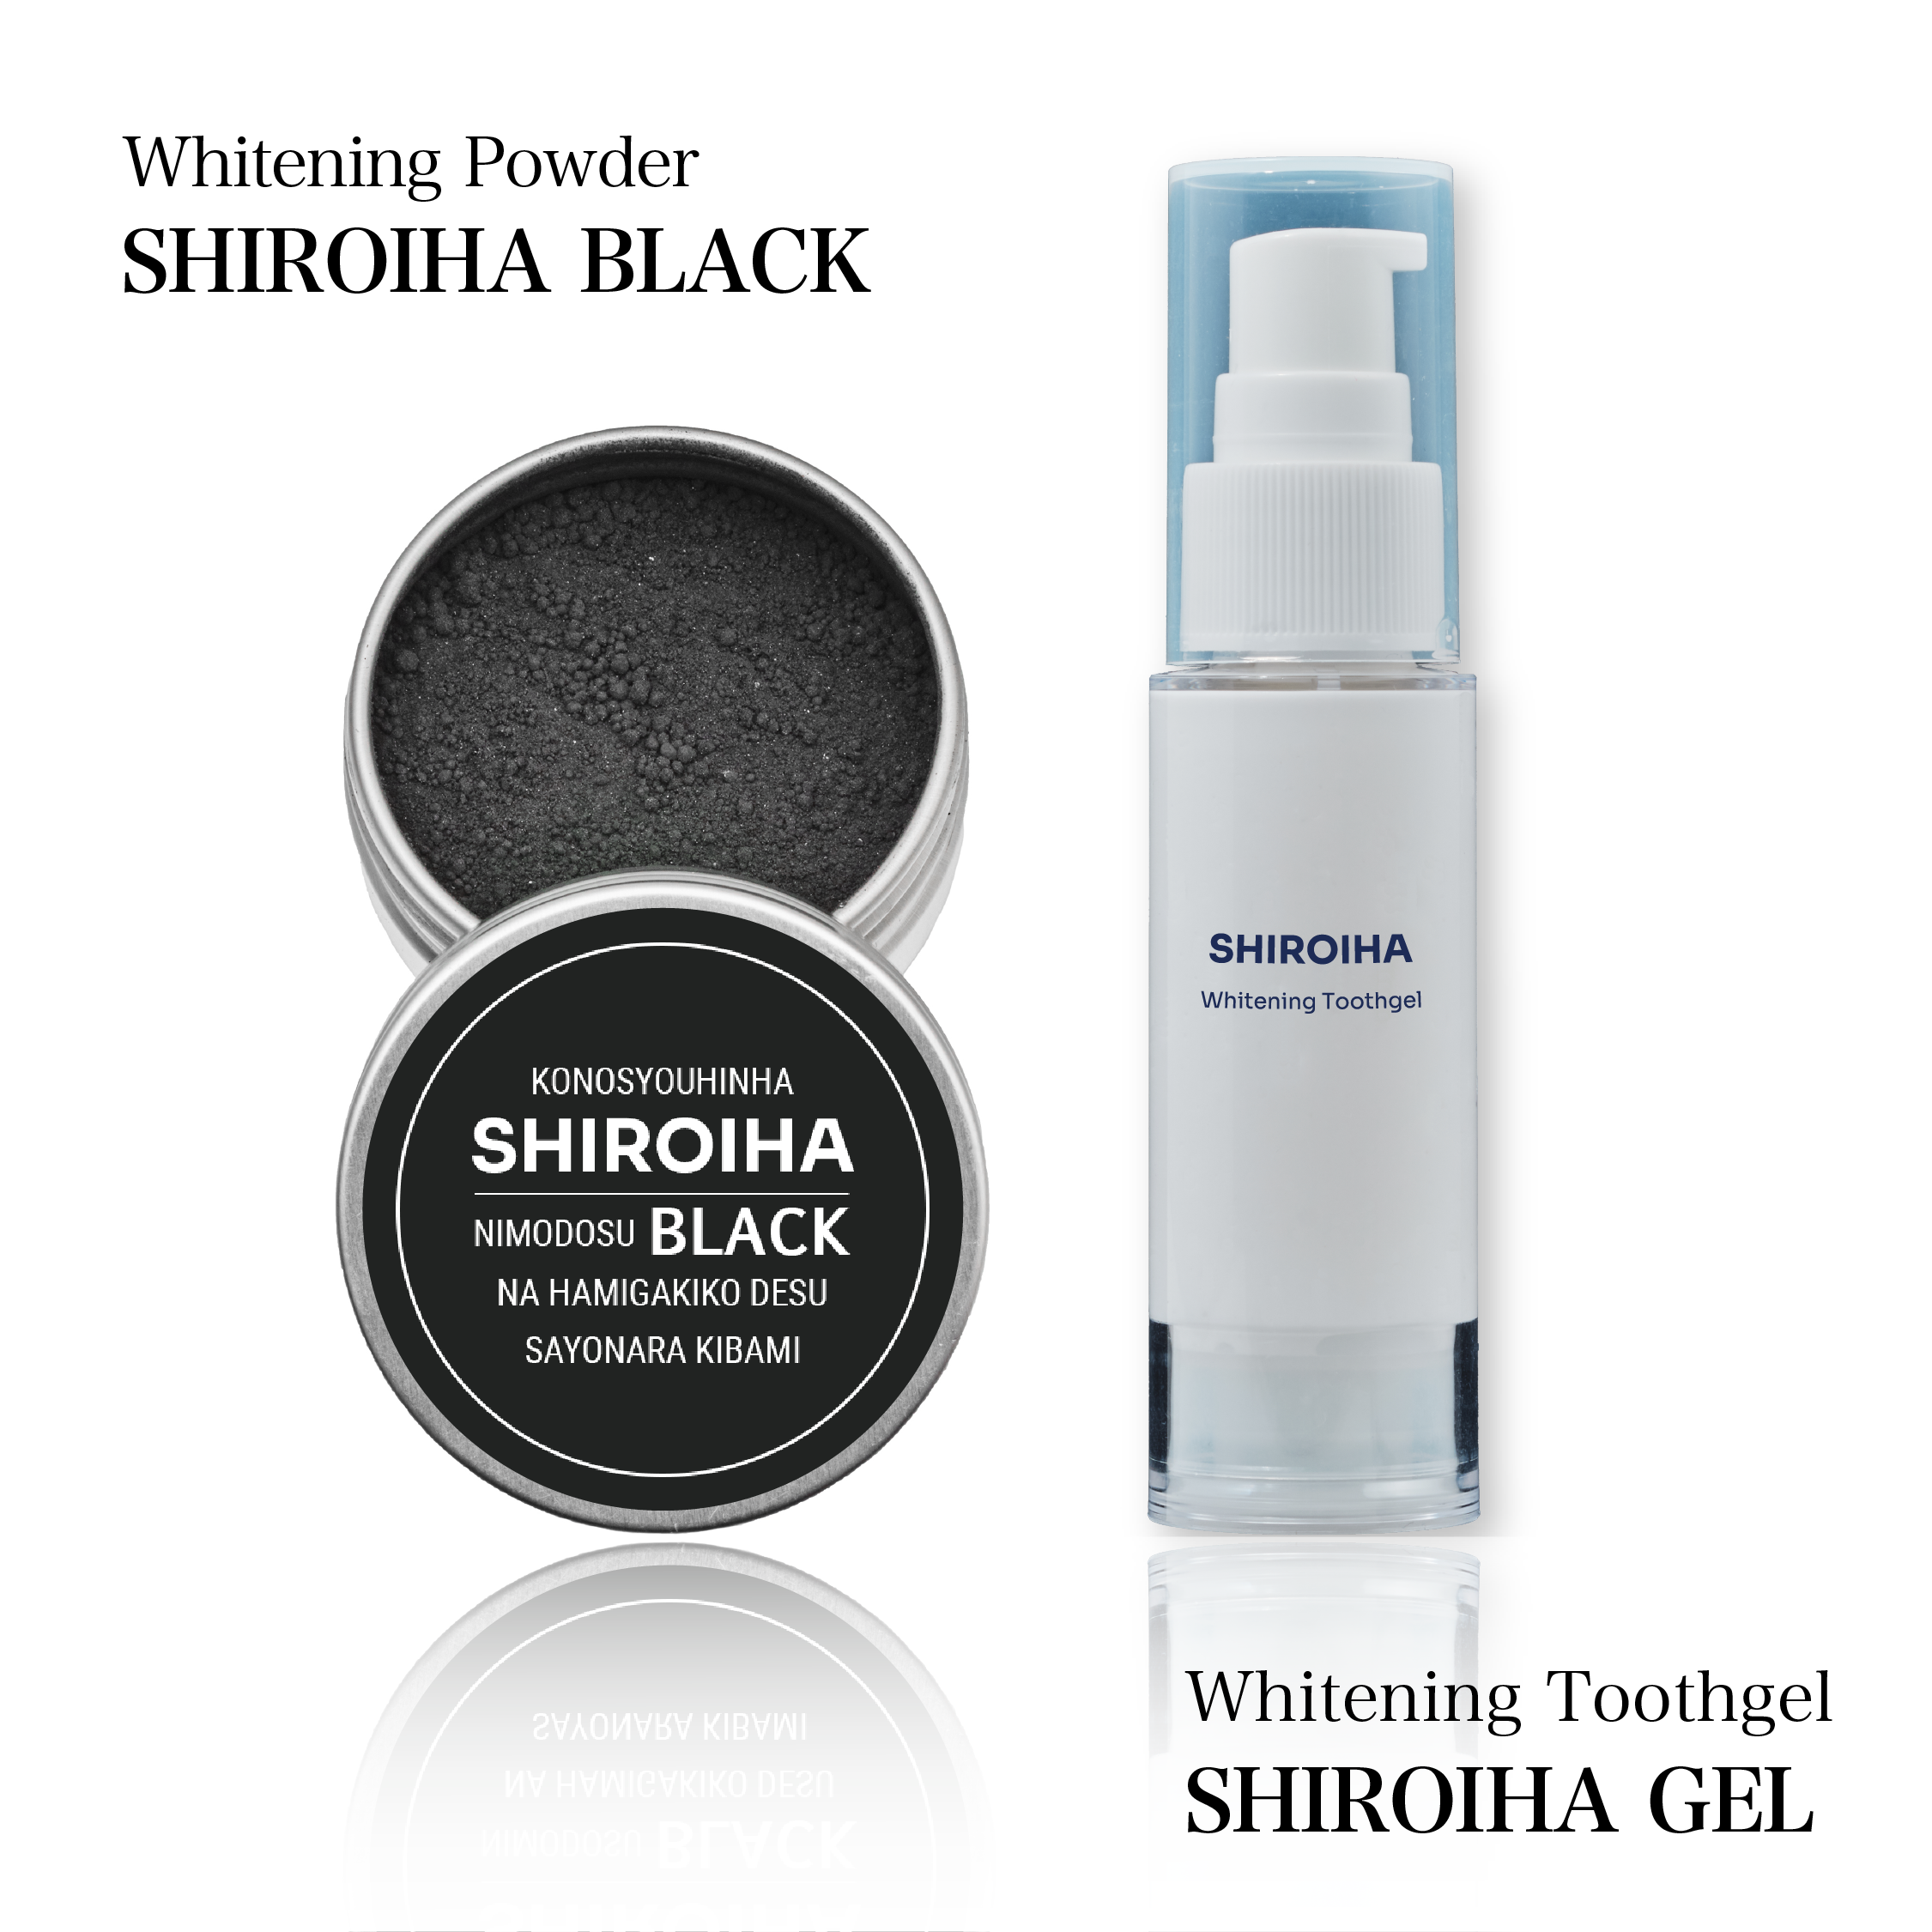 SHIROIHA BLACK & GEL